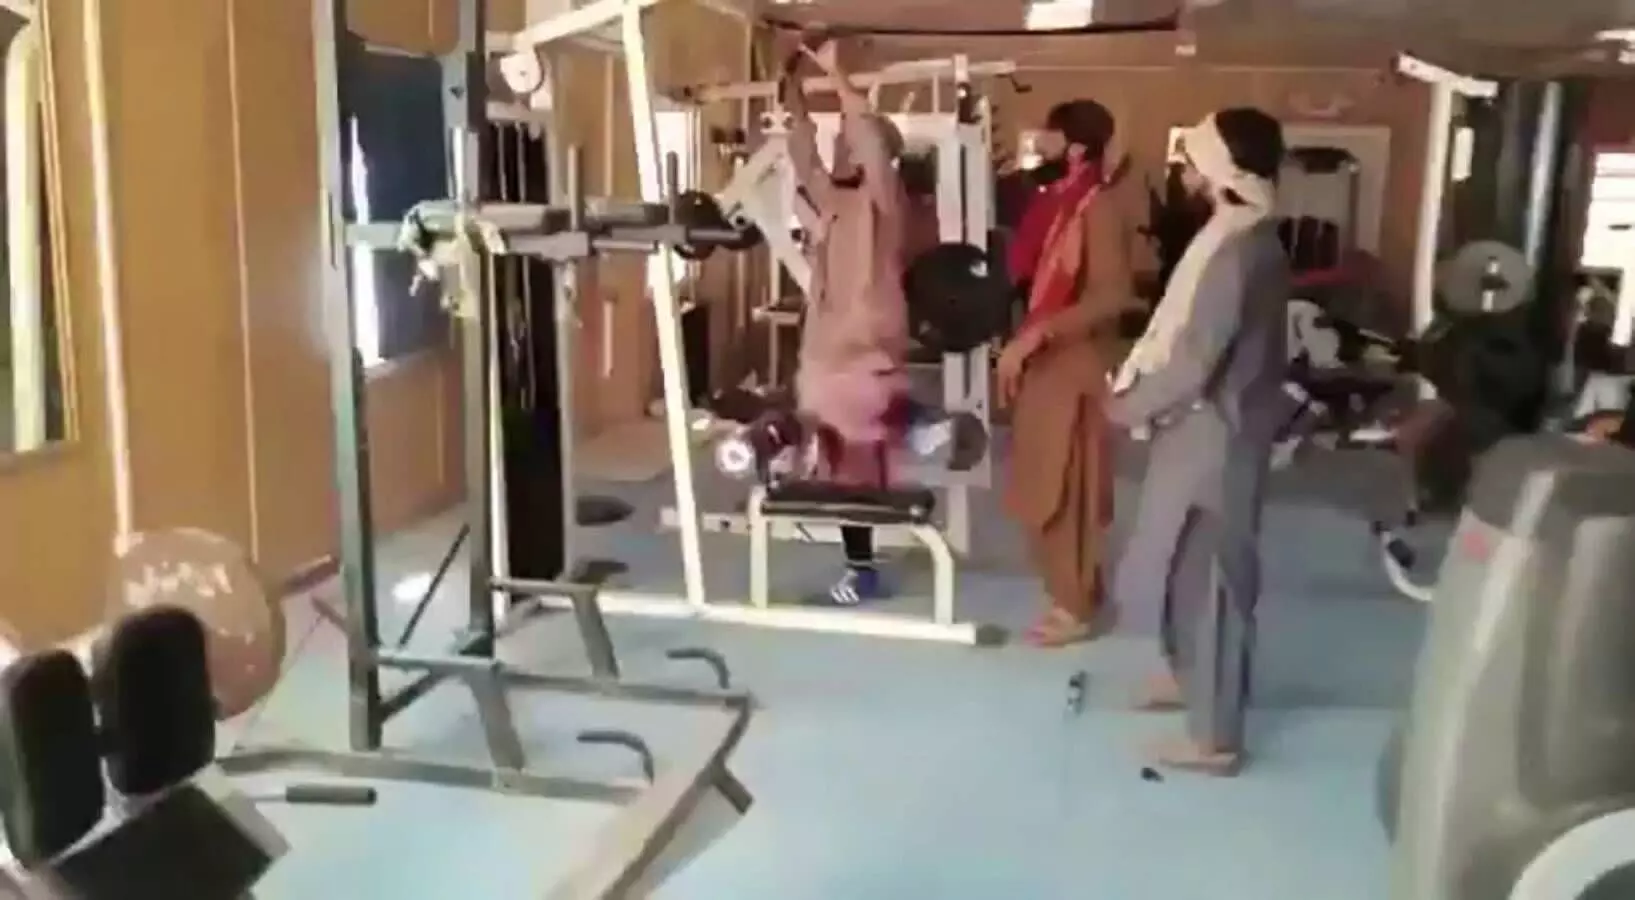 Taliban fighters seen having fun in children